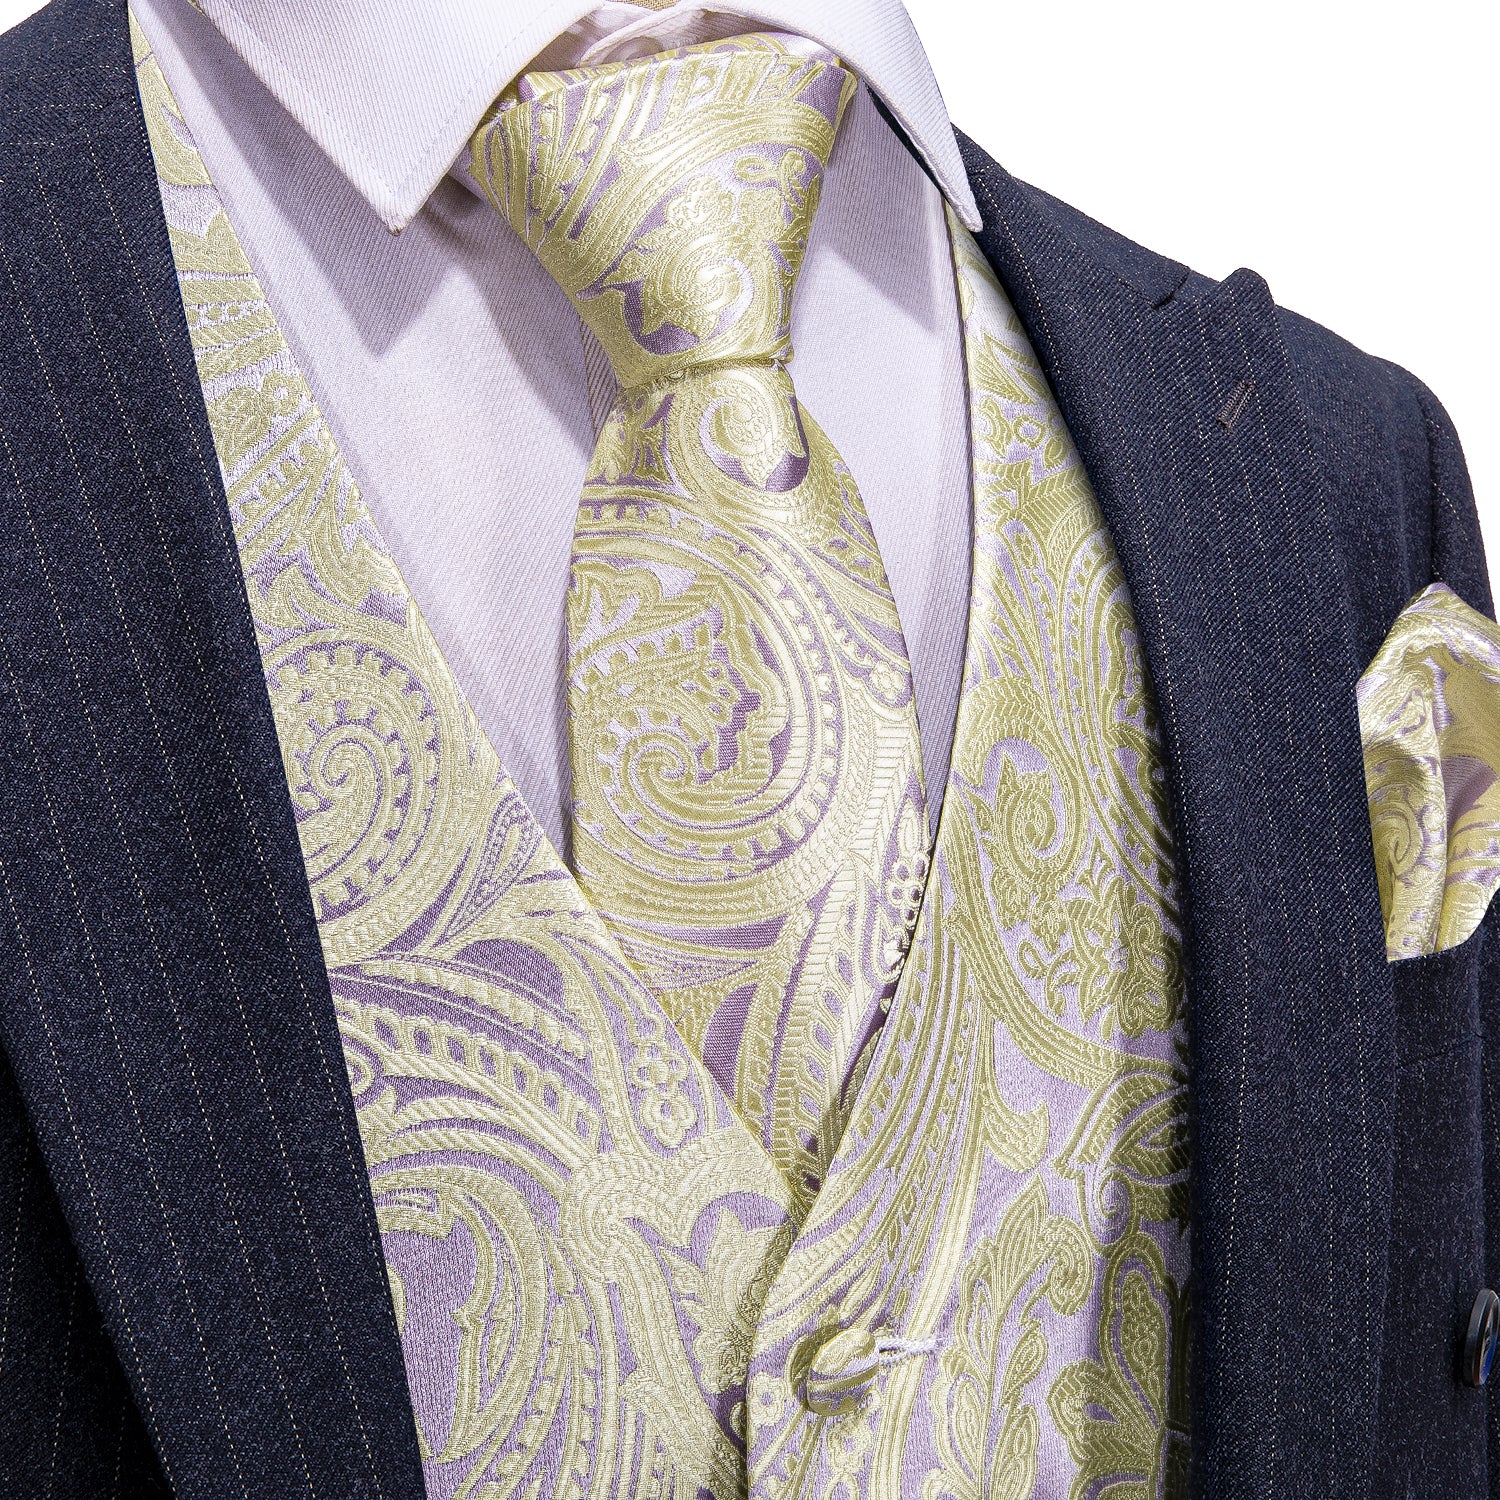 Men's Yellow Paisley Silk Vest Necktie Pocket square Cufflinks